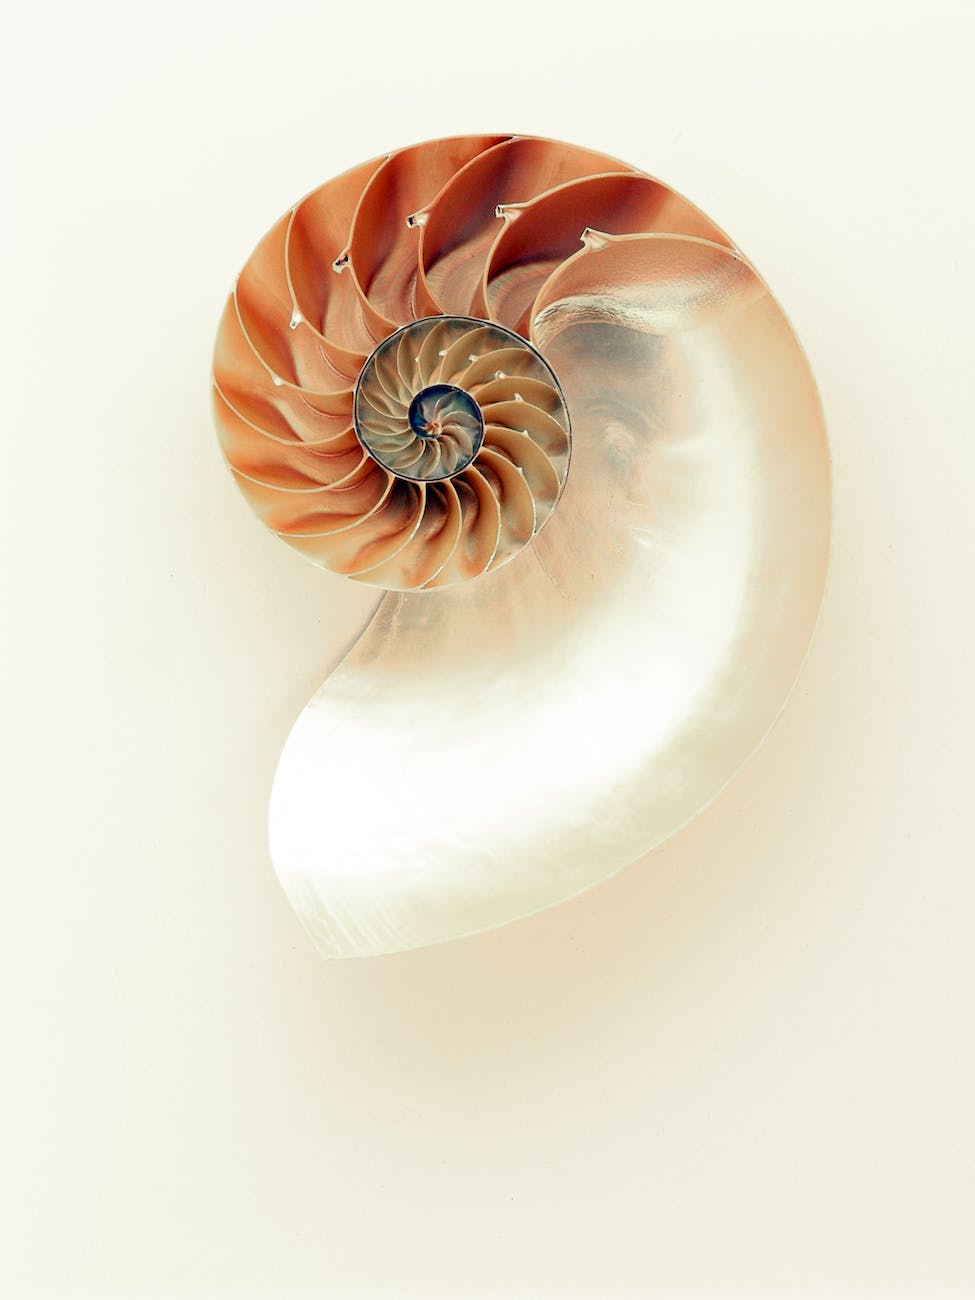 orange and white seashell on white surface